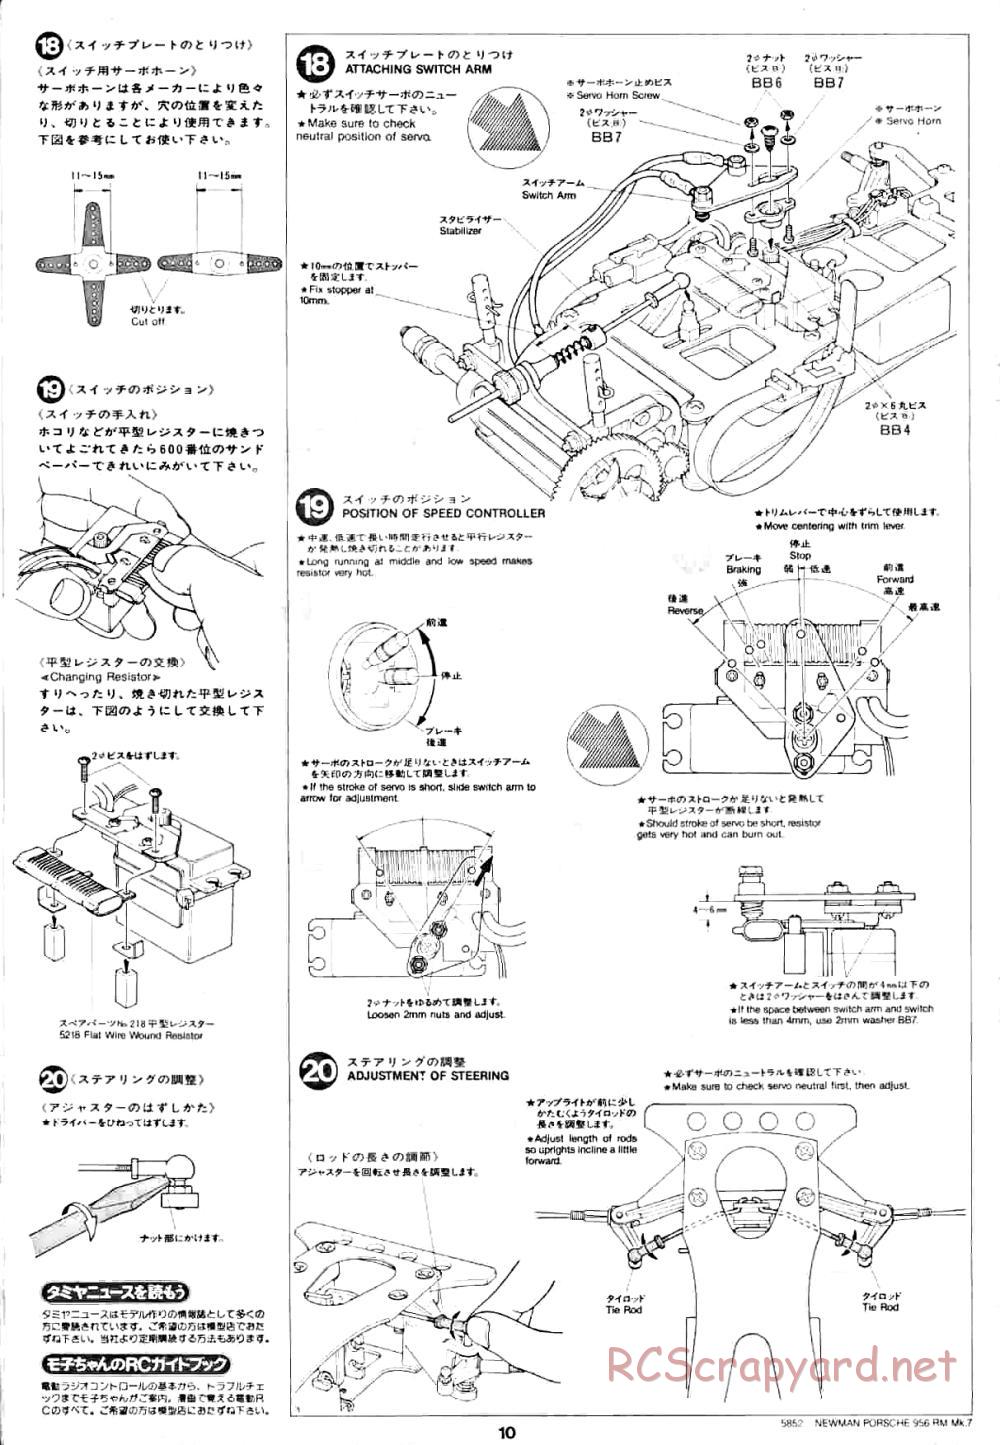 Tamiya - Newman Prsch 956 - RM MK.7 - 58052 - Manual - Page 10